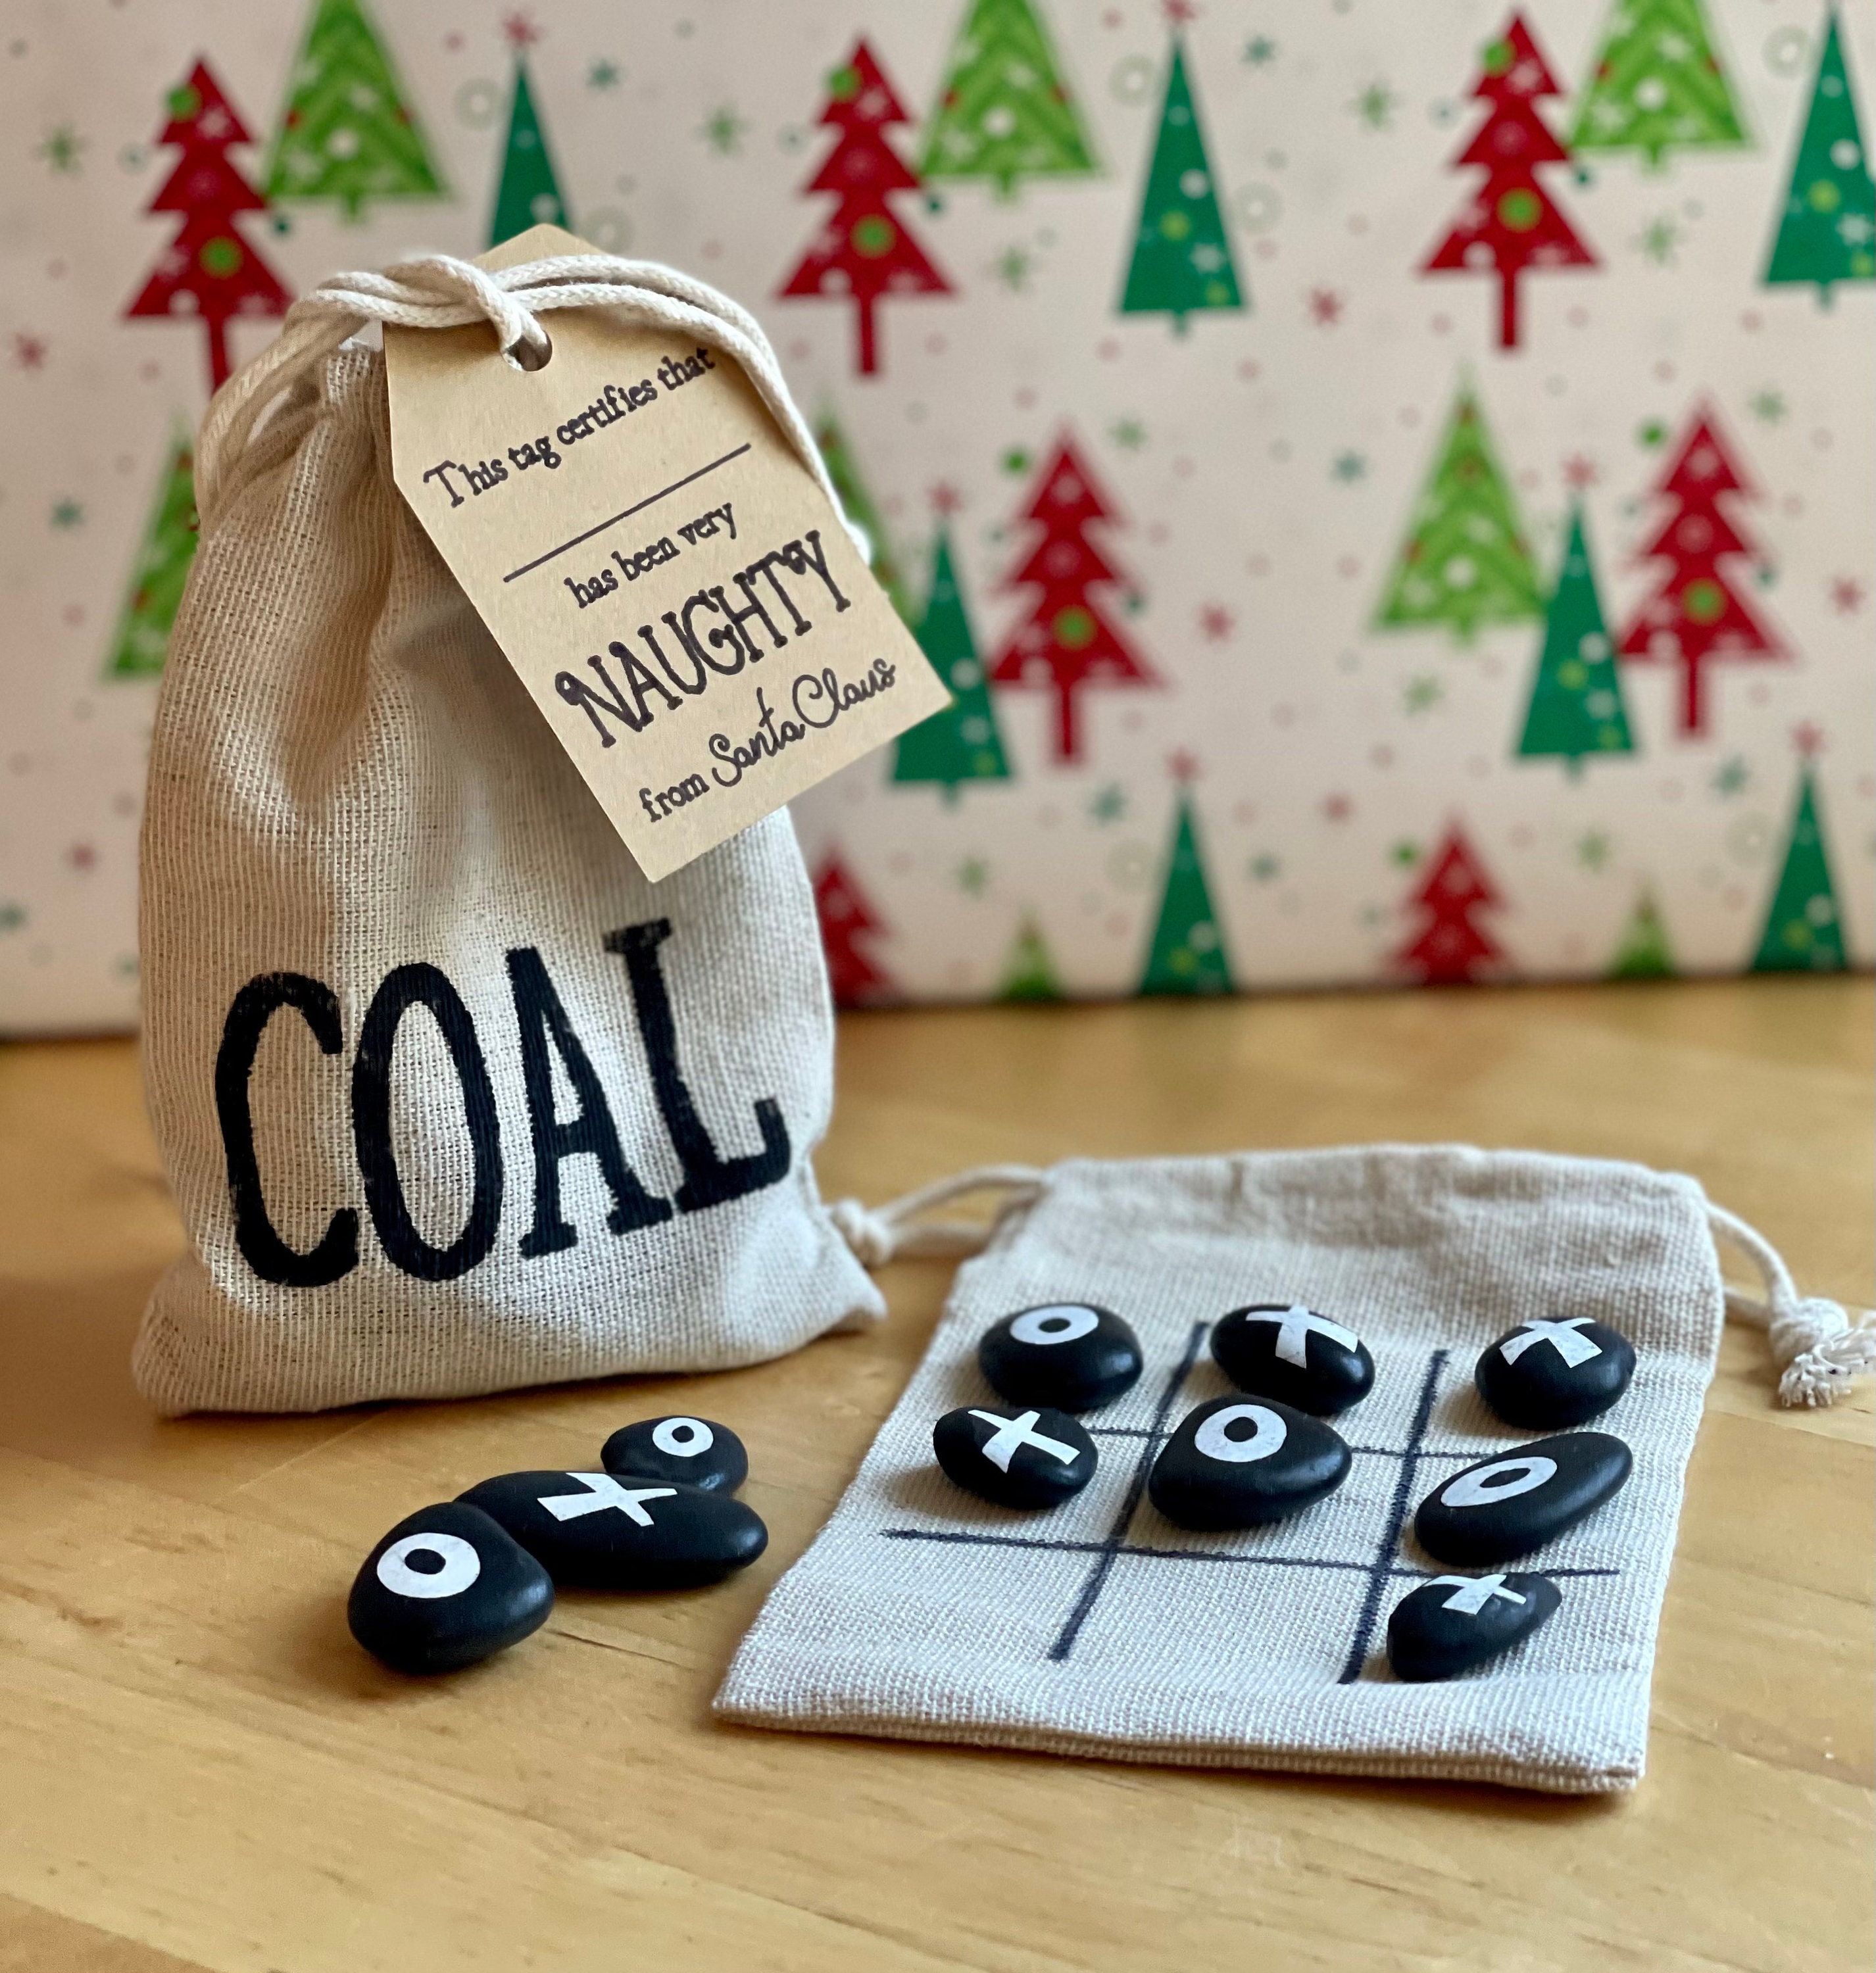 Lump of Coal Holiday Cookie Stocking Stuffers – Idea Land